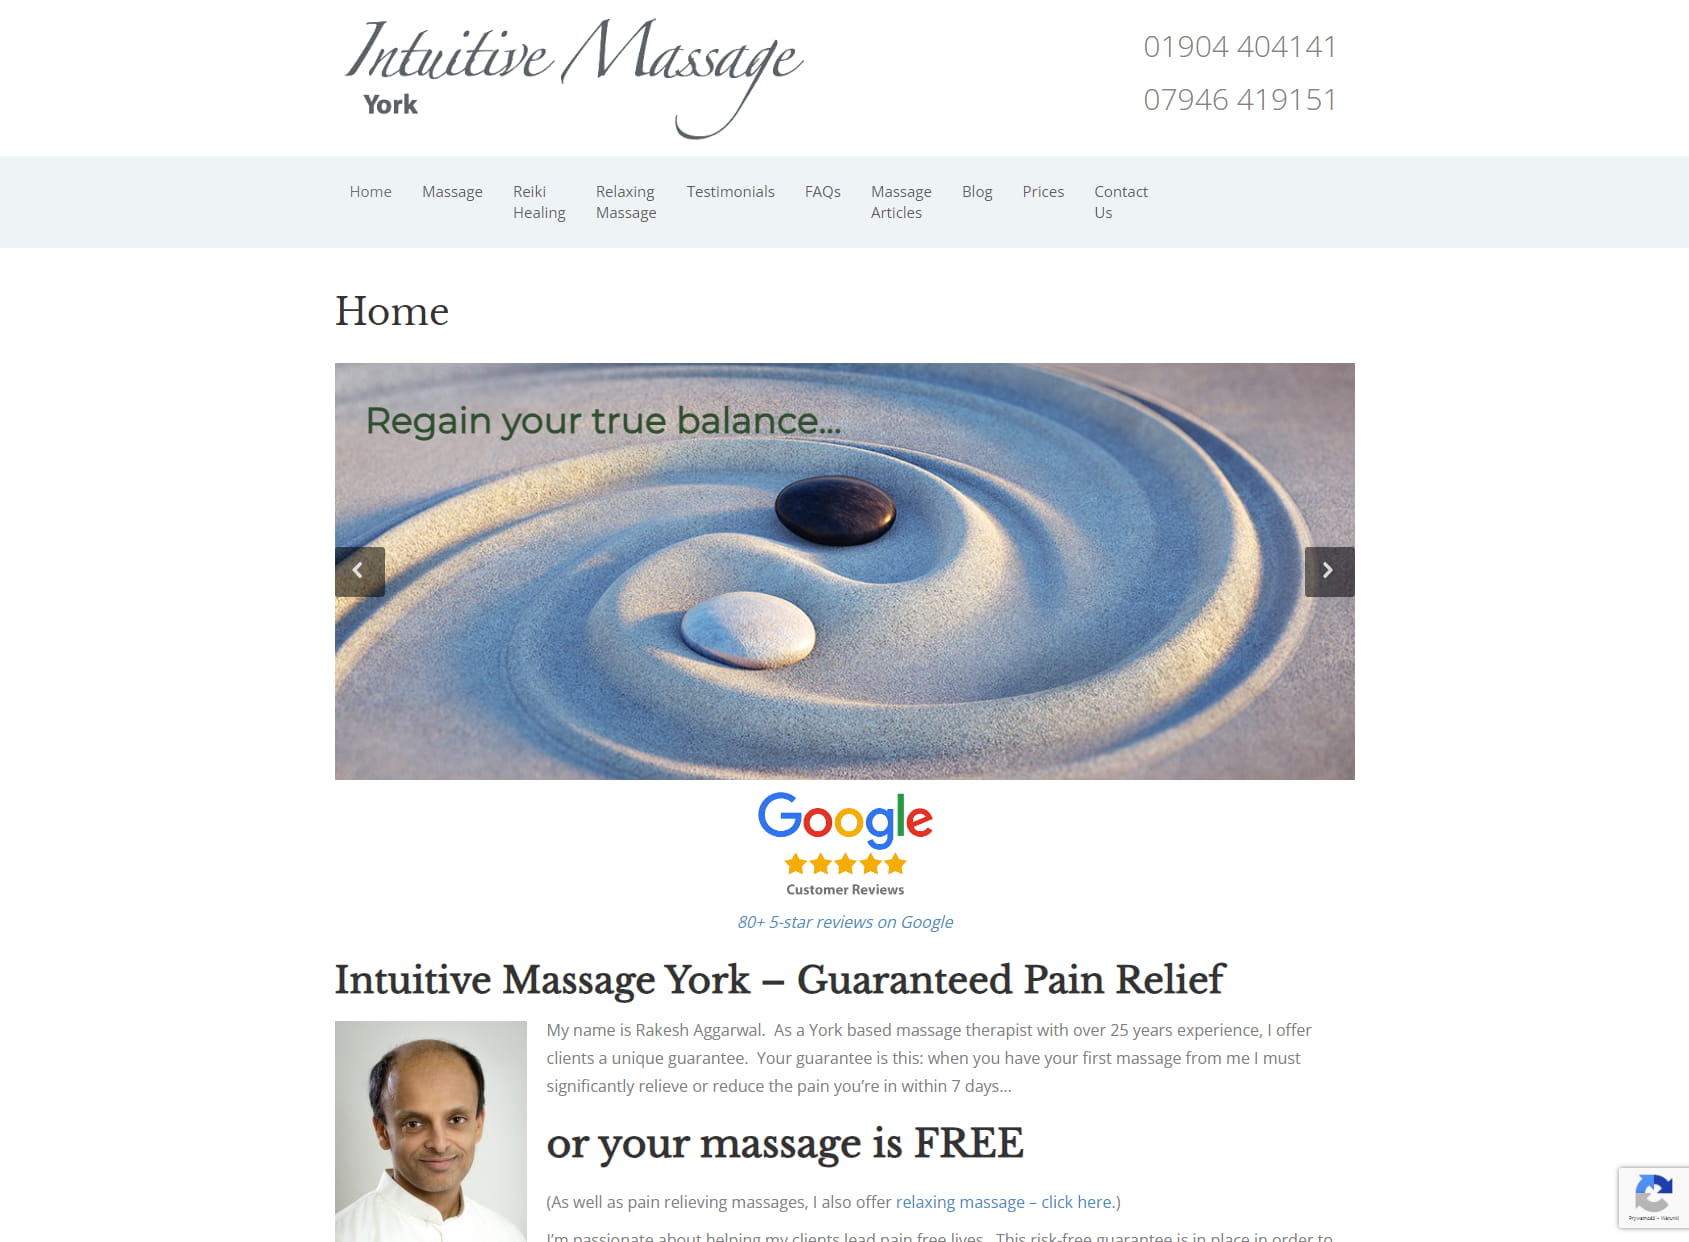 Intuitive Massage York